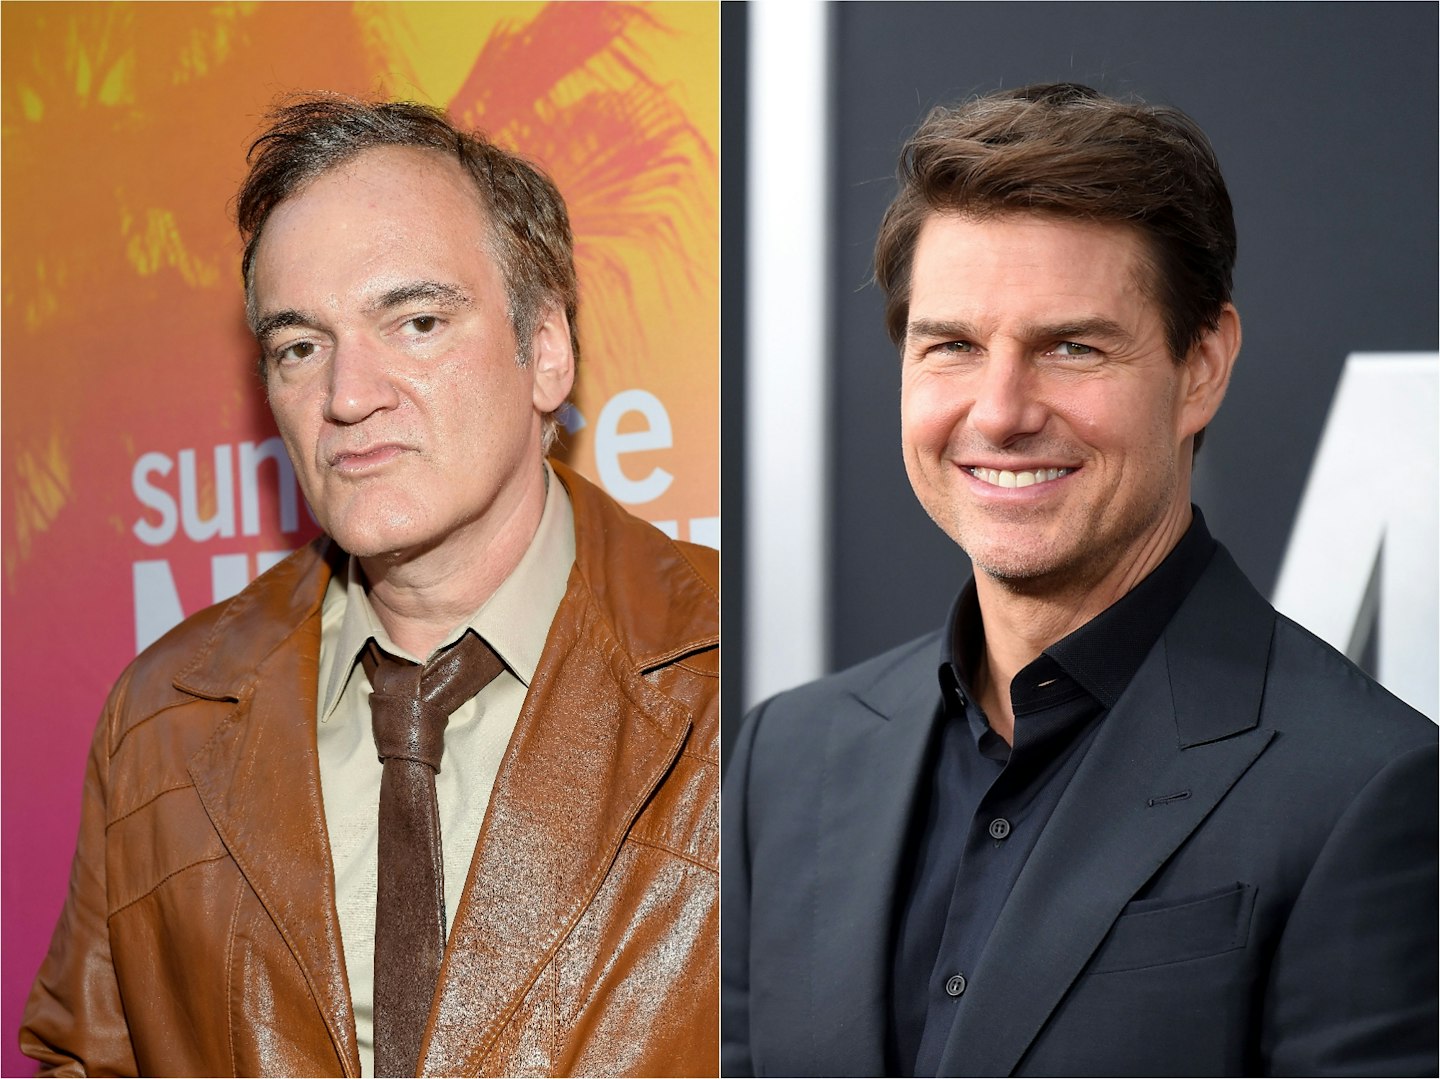 Quentin Tarantino and Tom Cruise